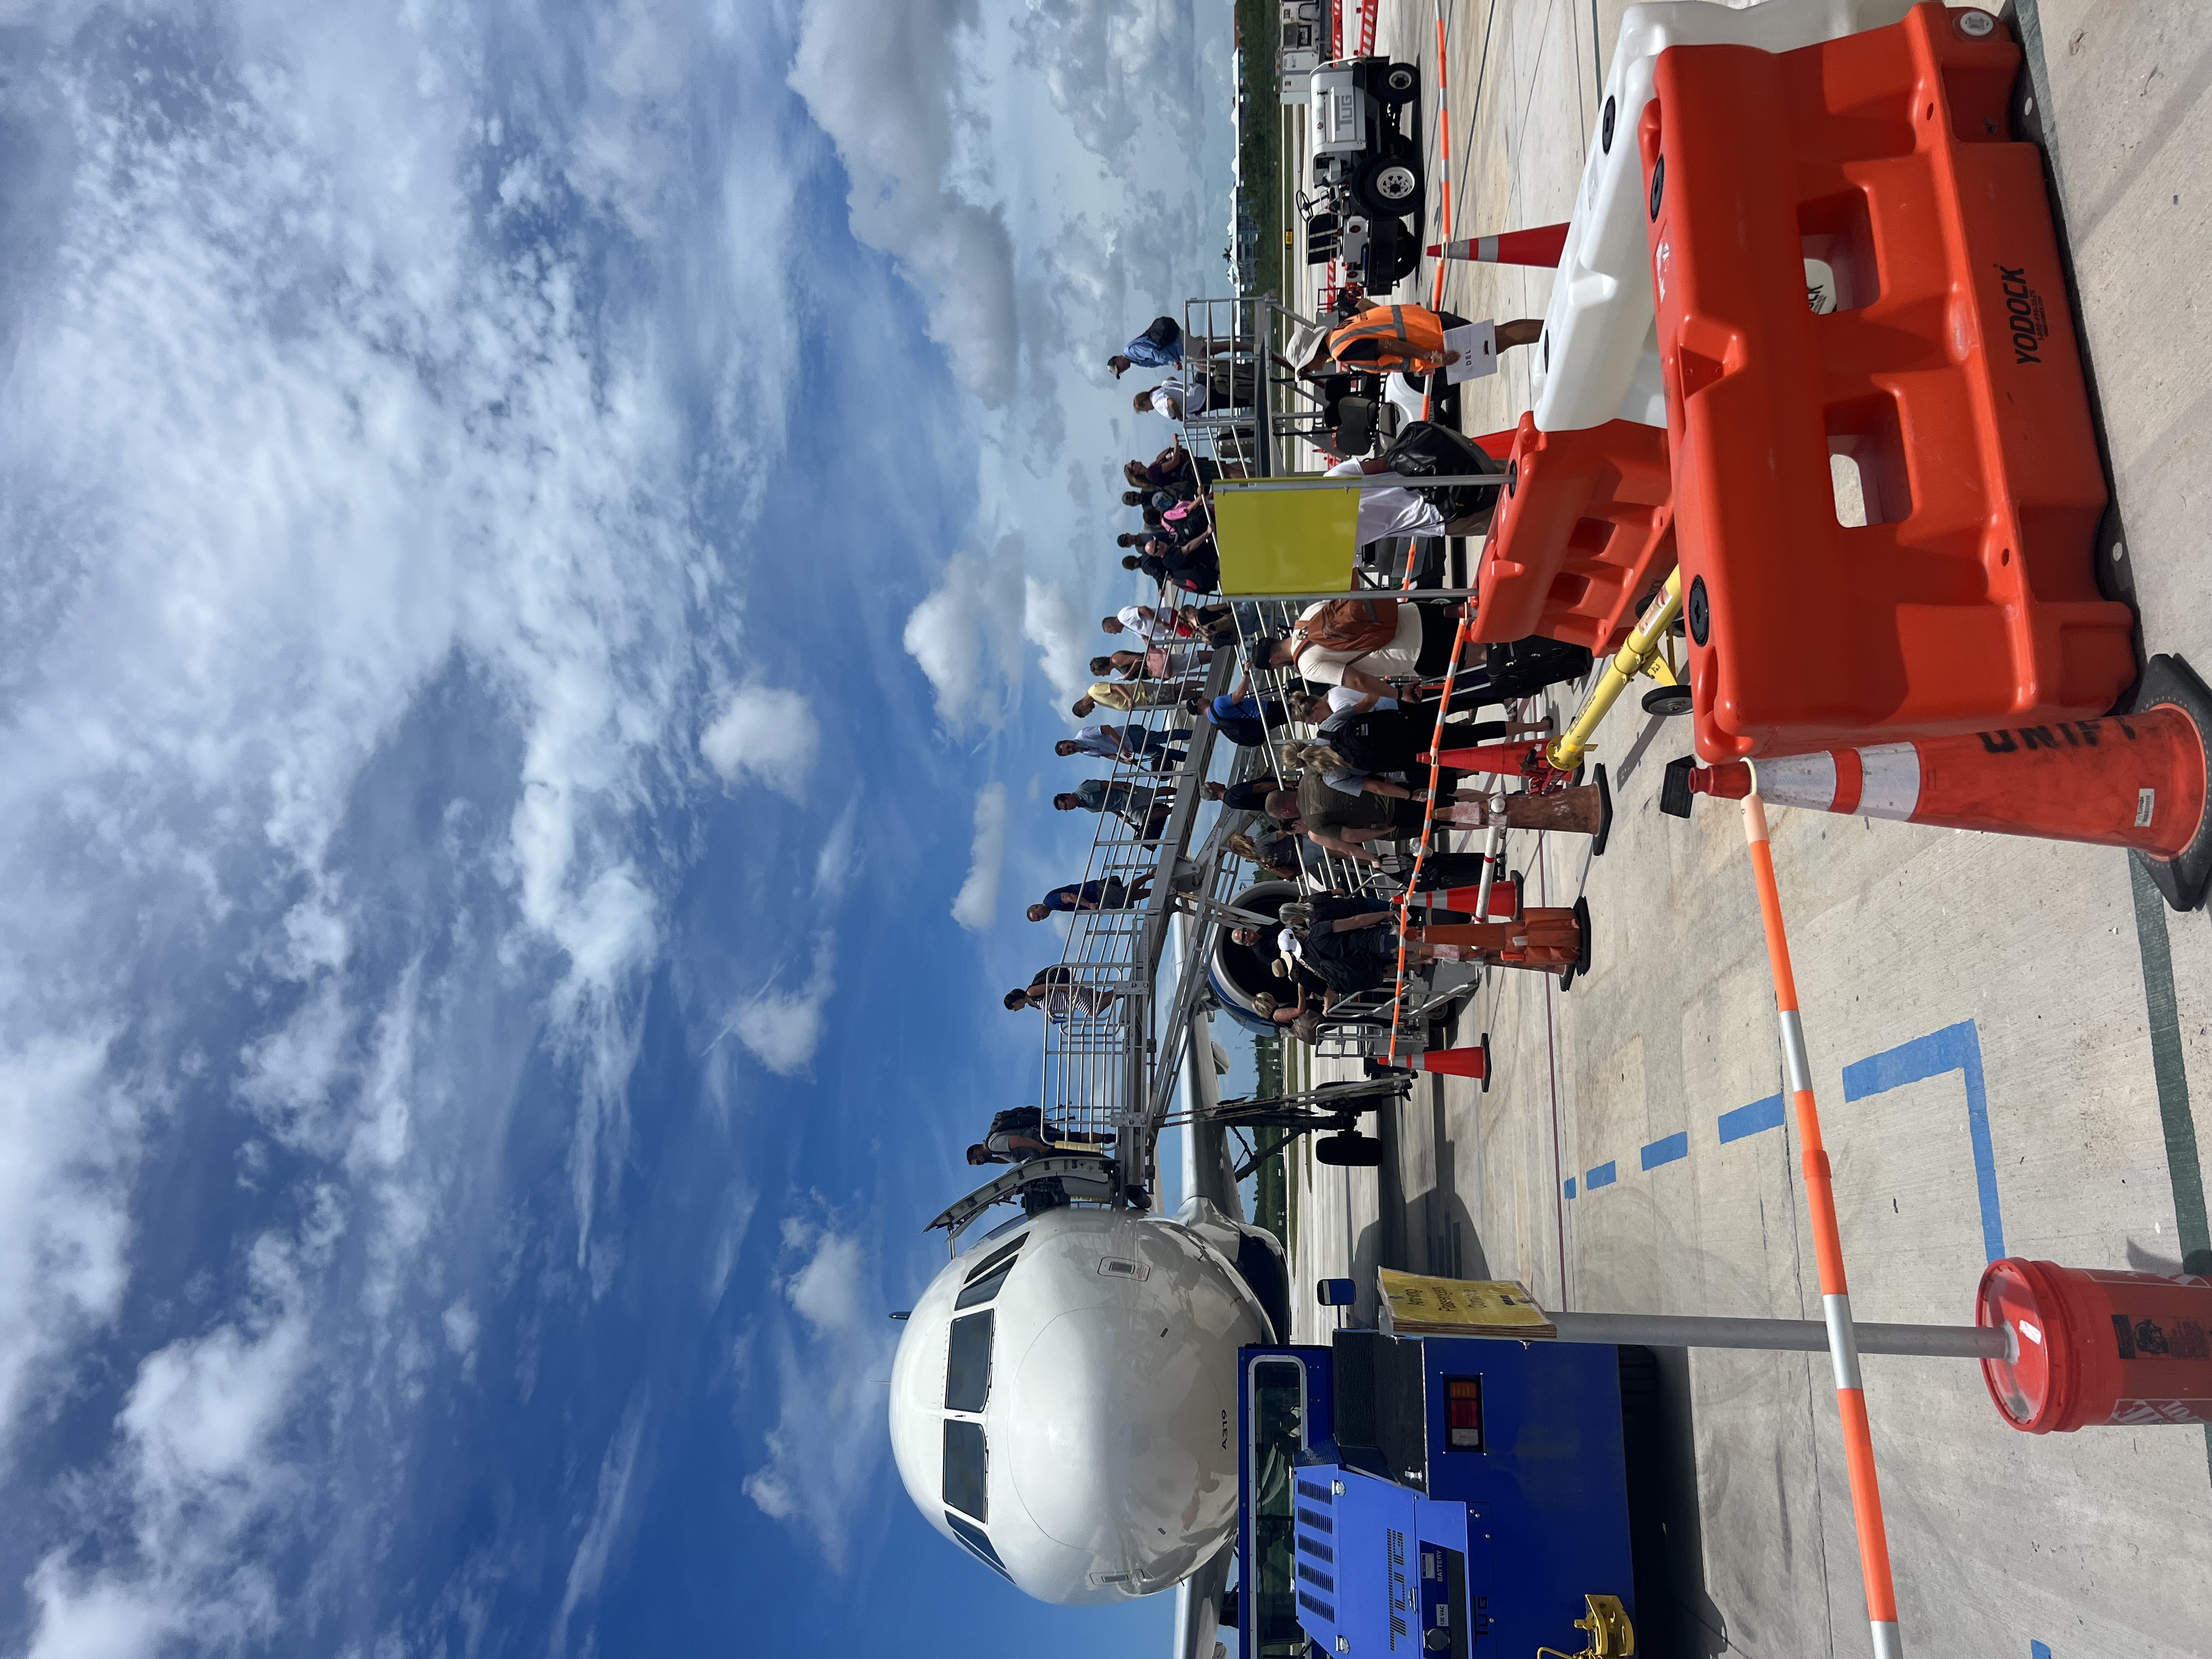 Passengers boarding a plane.